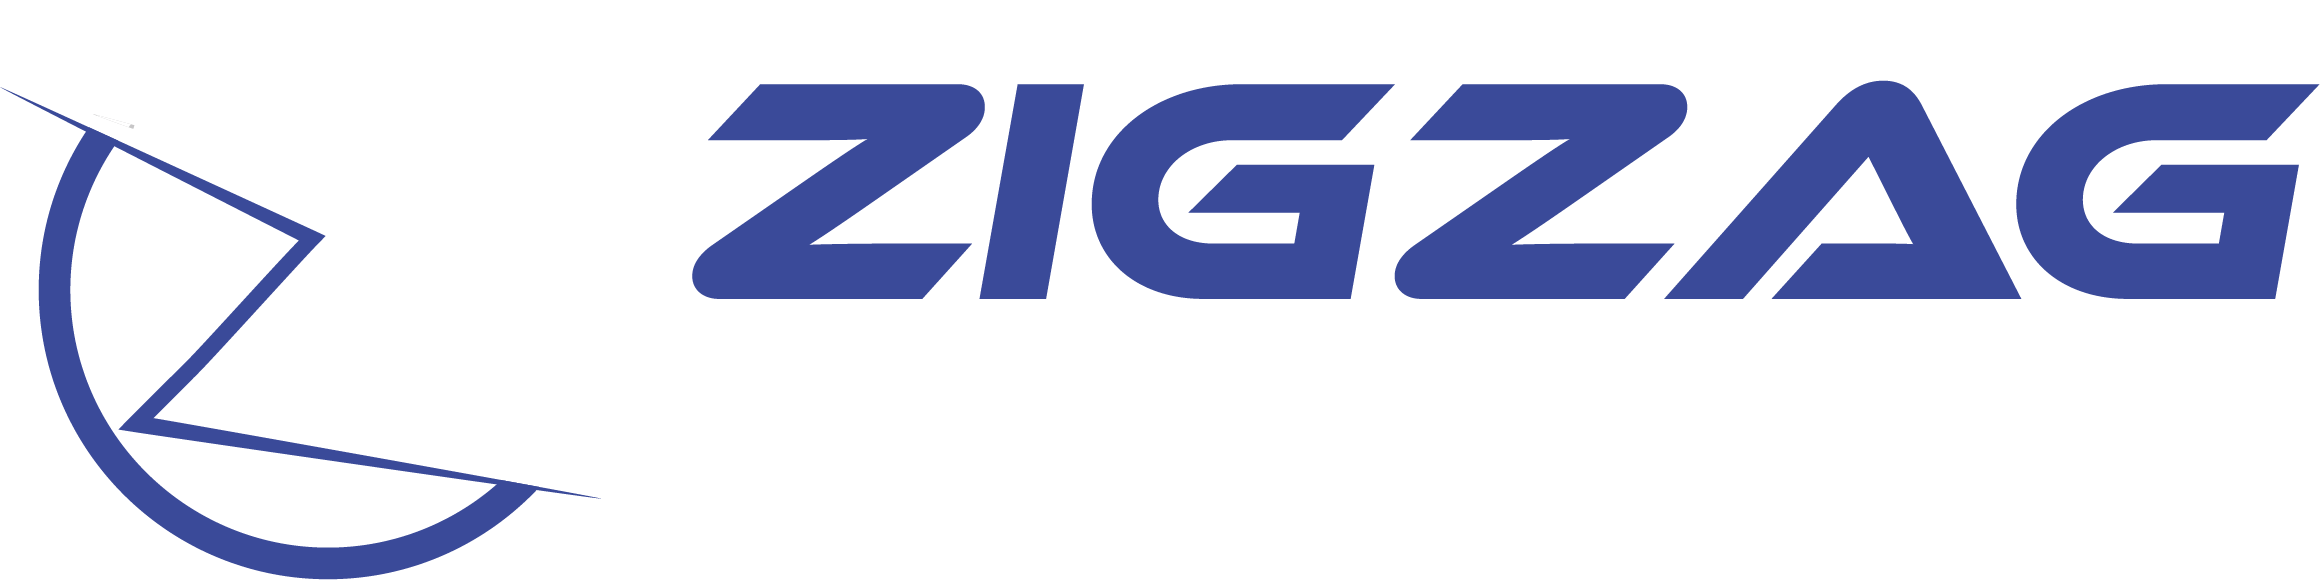 Zigzag Express